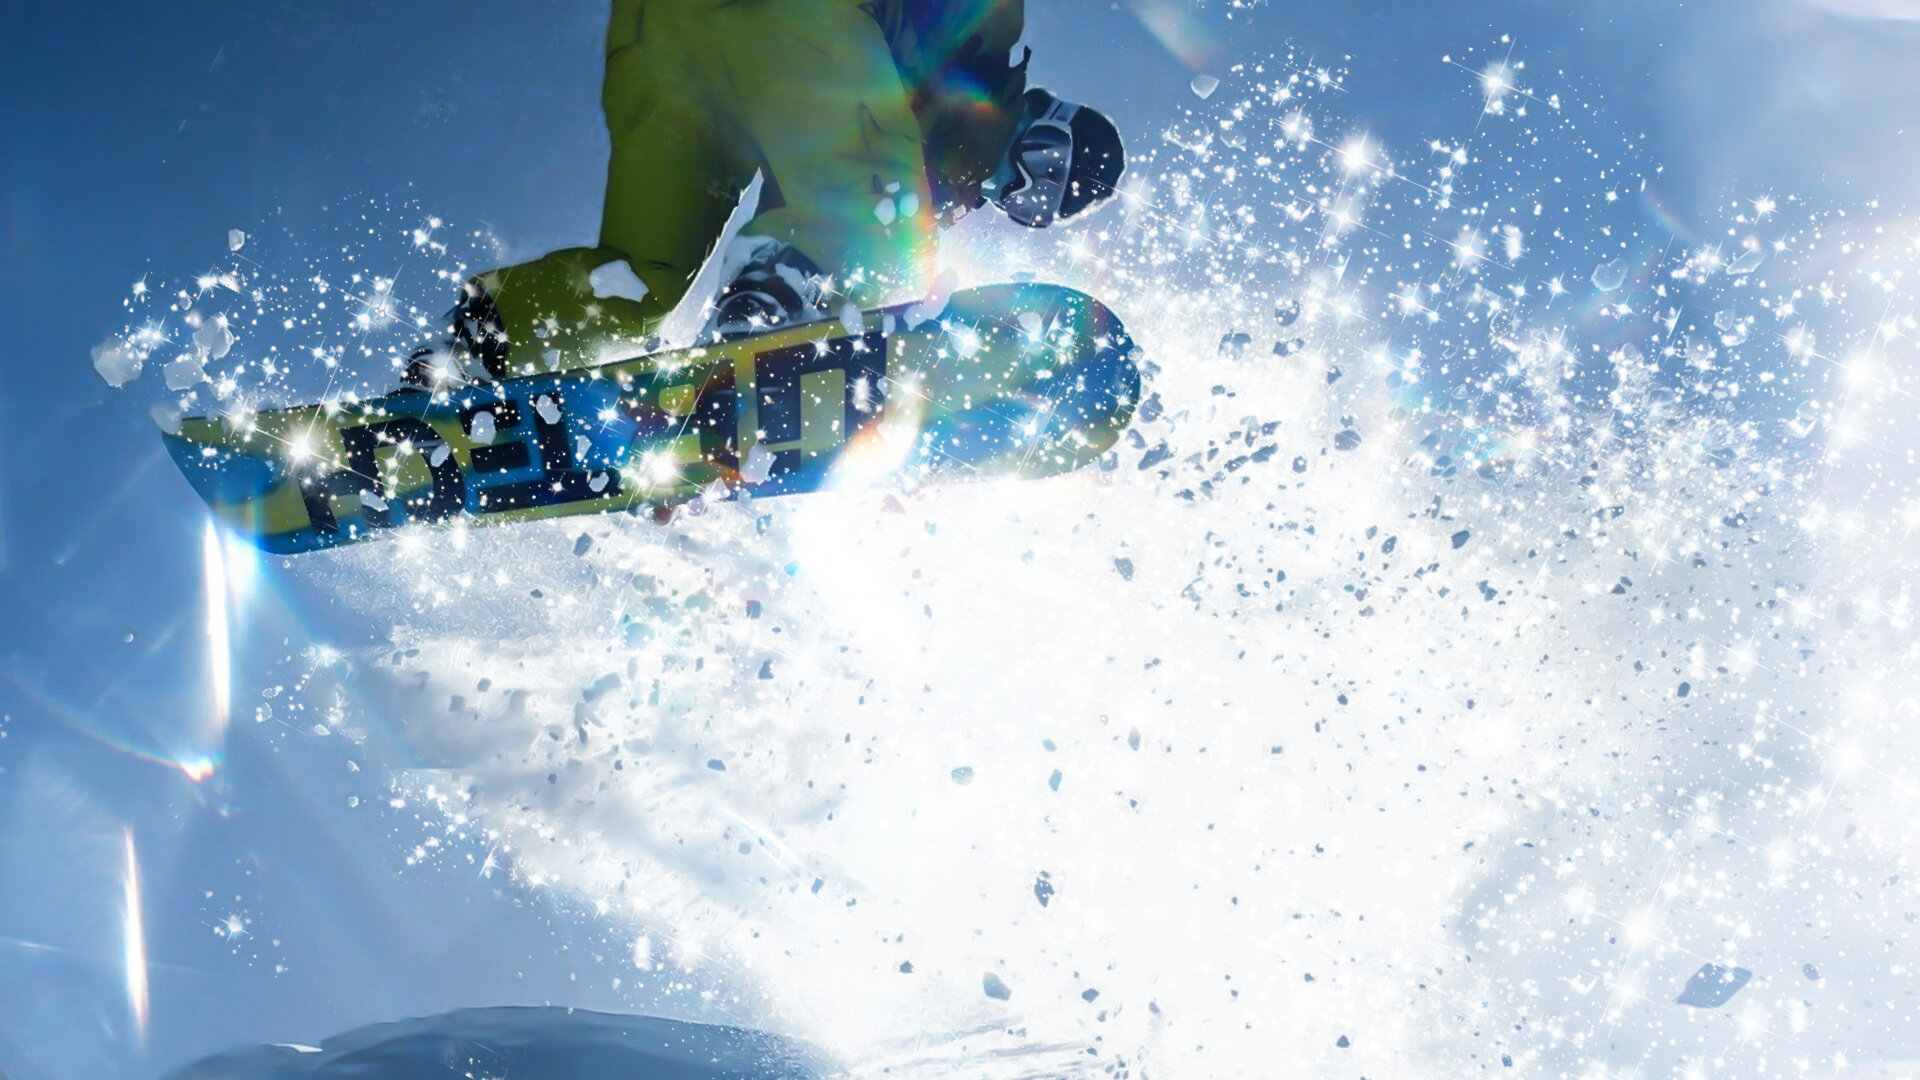 RollsRoyce_Concept_snowboarder_002.jpg